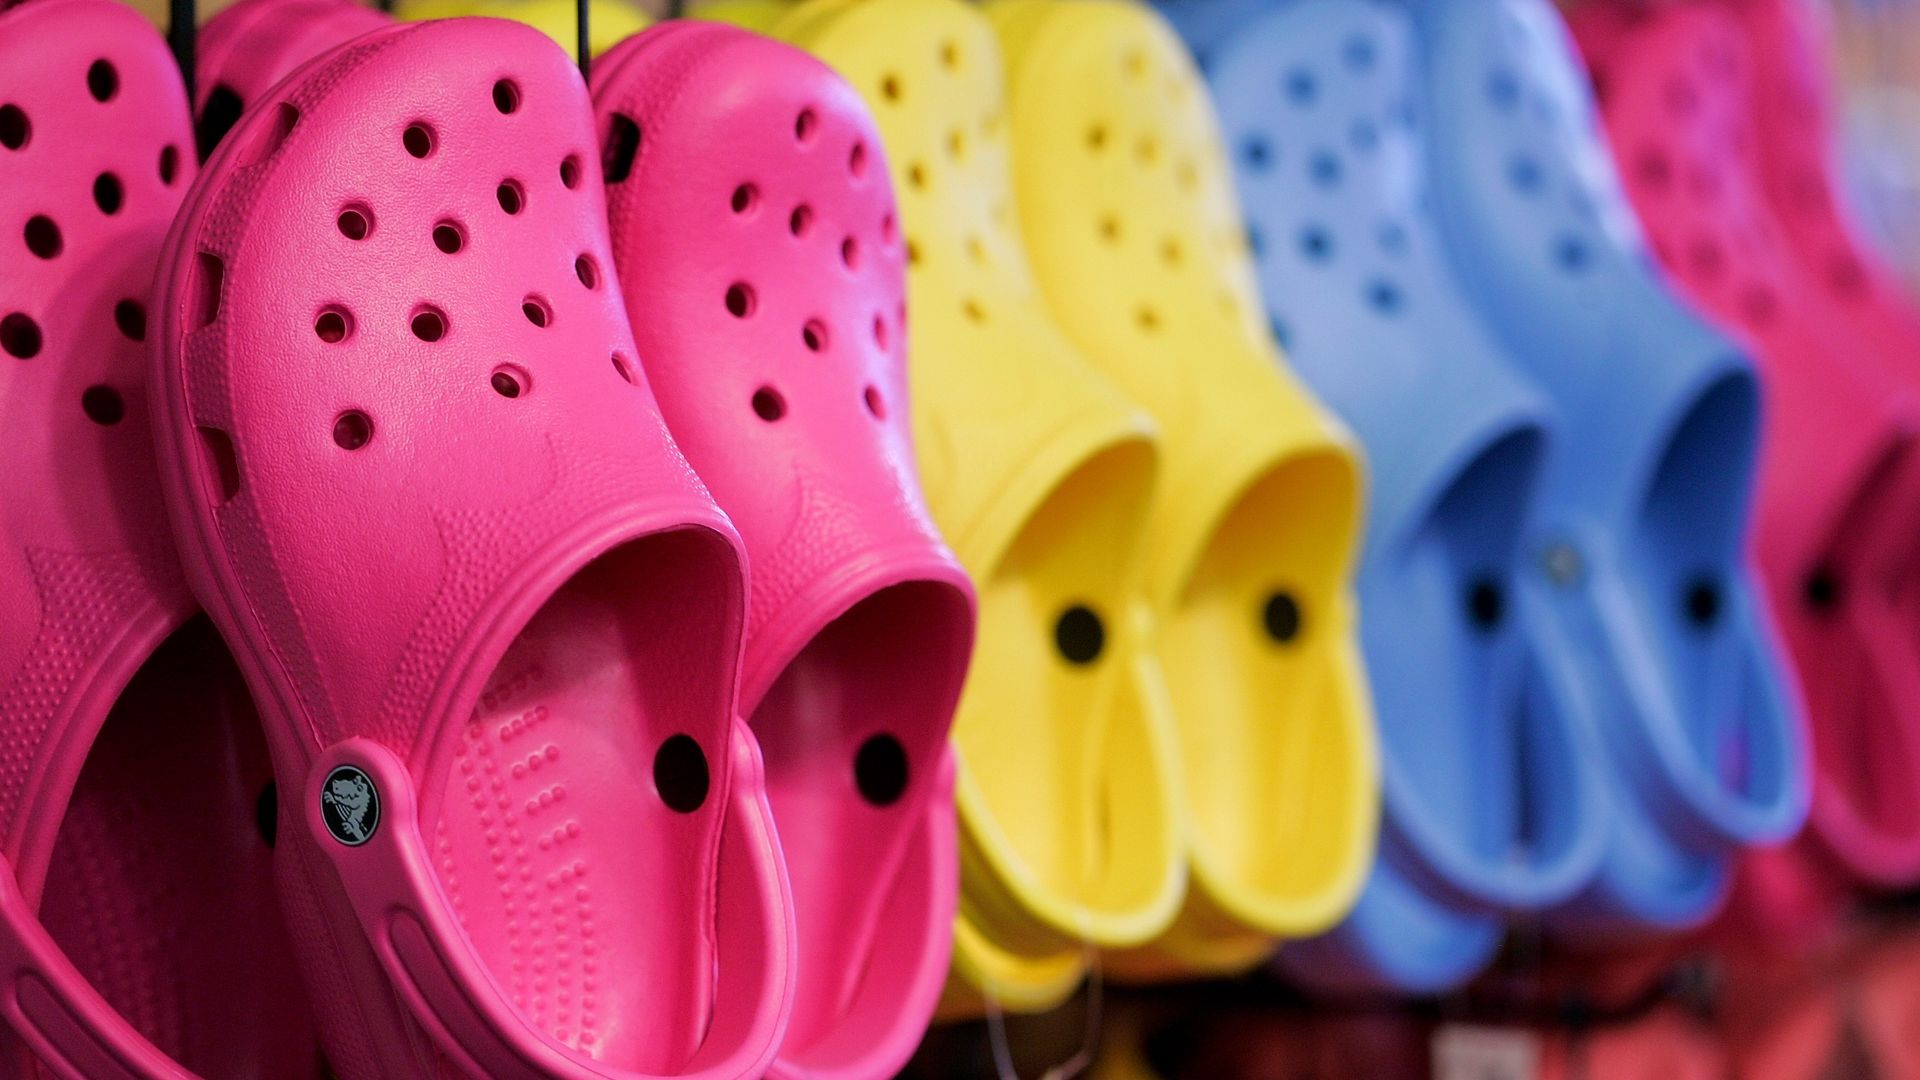 Crocs shoes at a store.